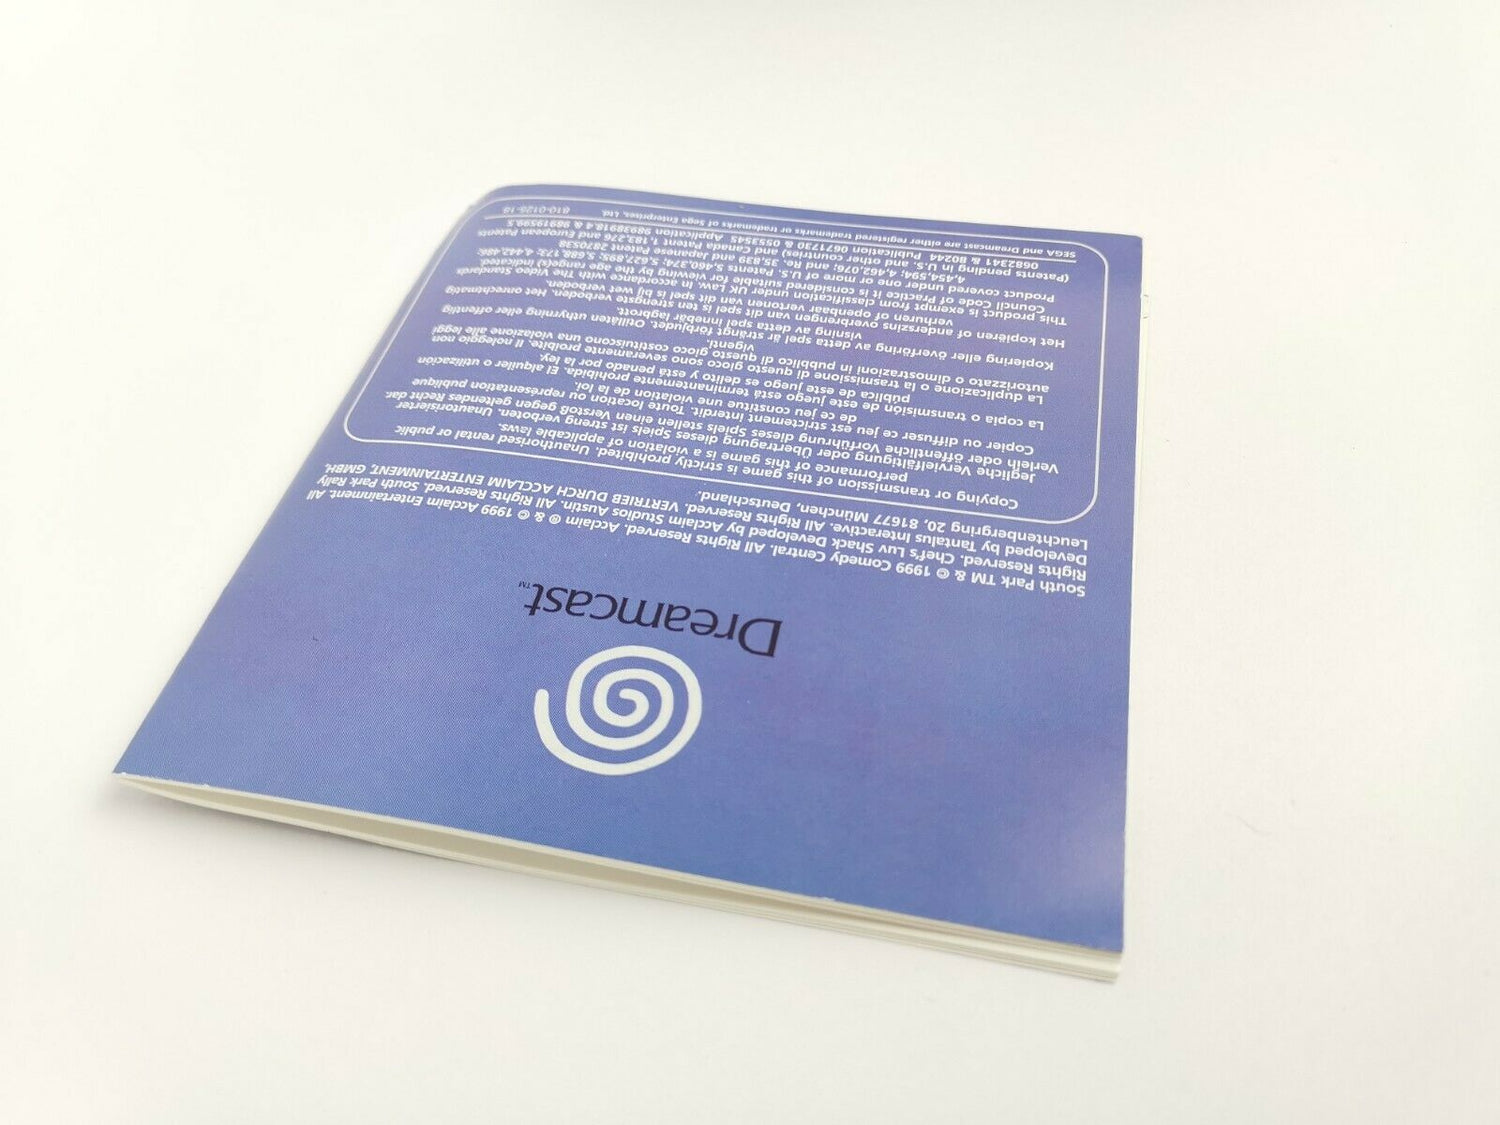 Sega Dreamcast game 